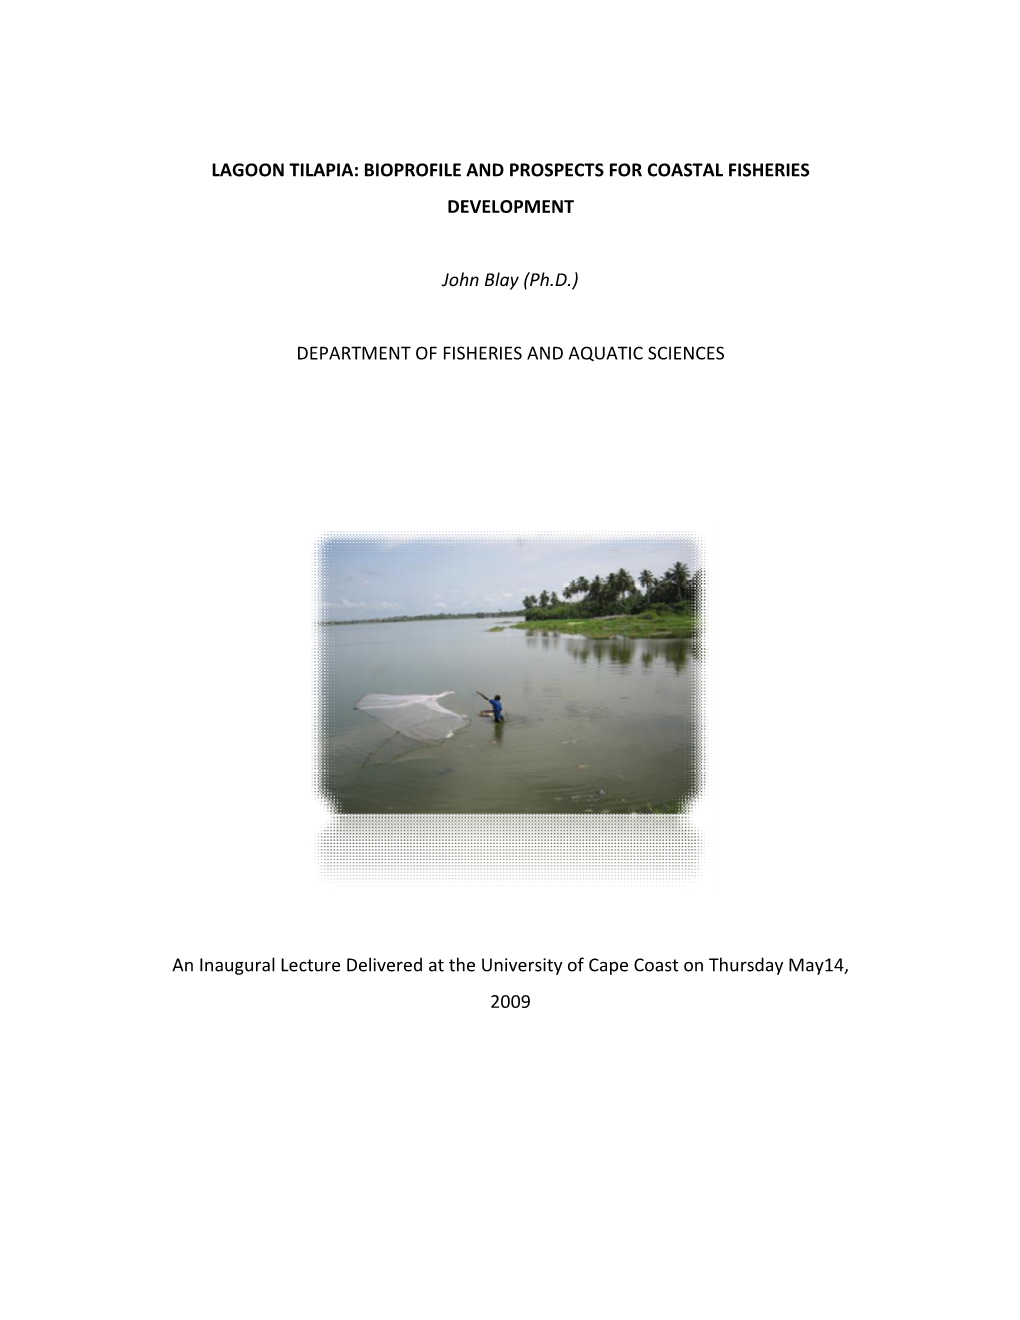 Lagoon Tilapia: Bioprofile and Prospects for Coastal Fisheries Development